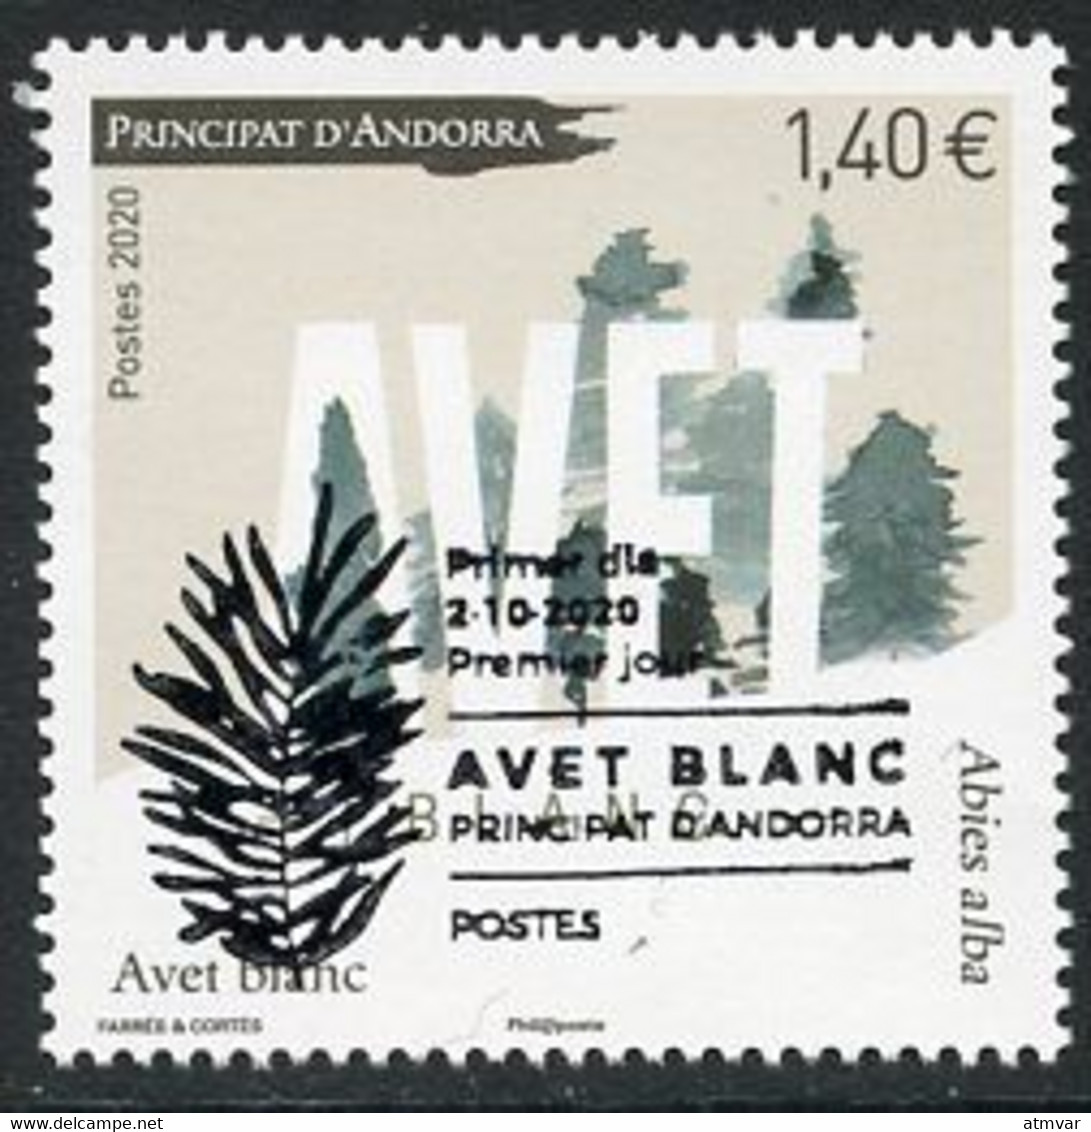 ANDORRA ANDORRE (2020) - Avet Blanc, Abies Alba, Sapin Blanc - Premier Jour, First Day Postmark, Matasello Primer Día - Gebraucht